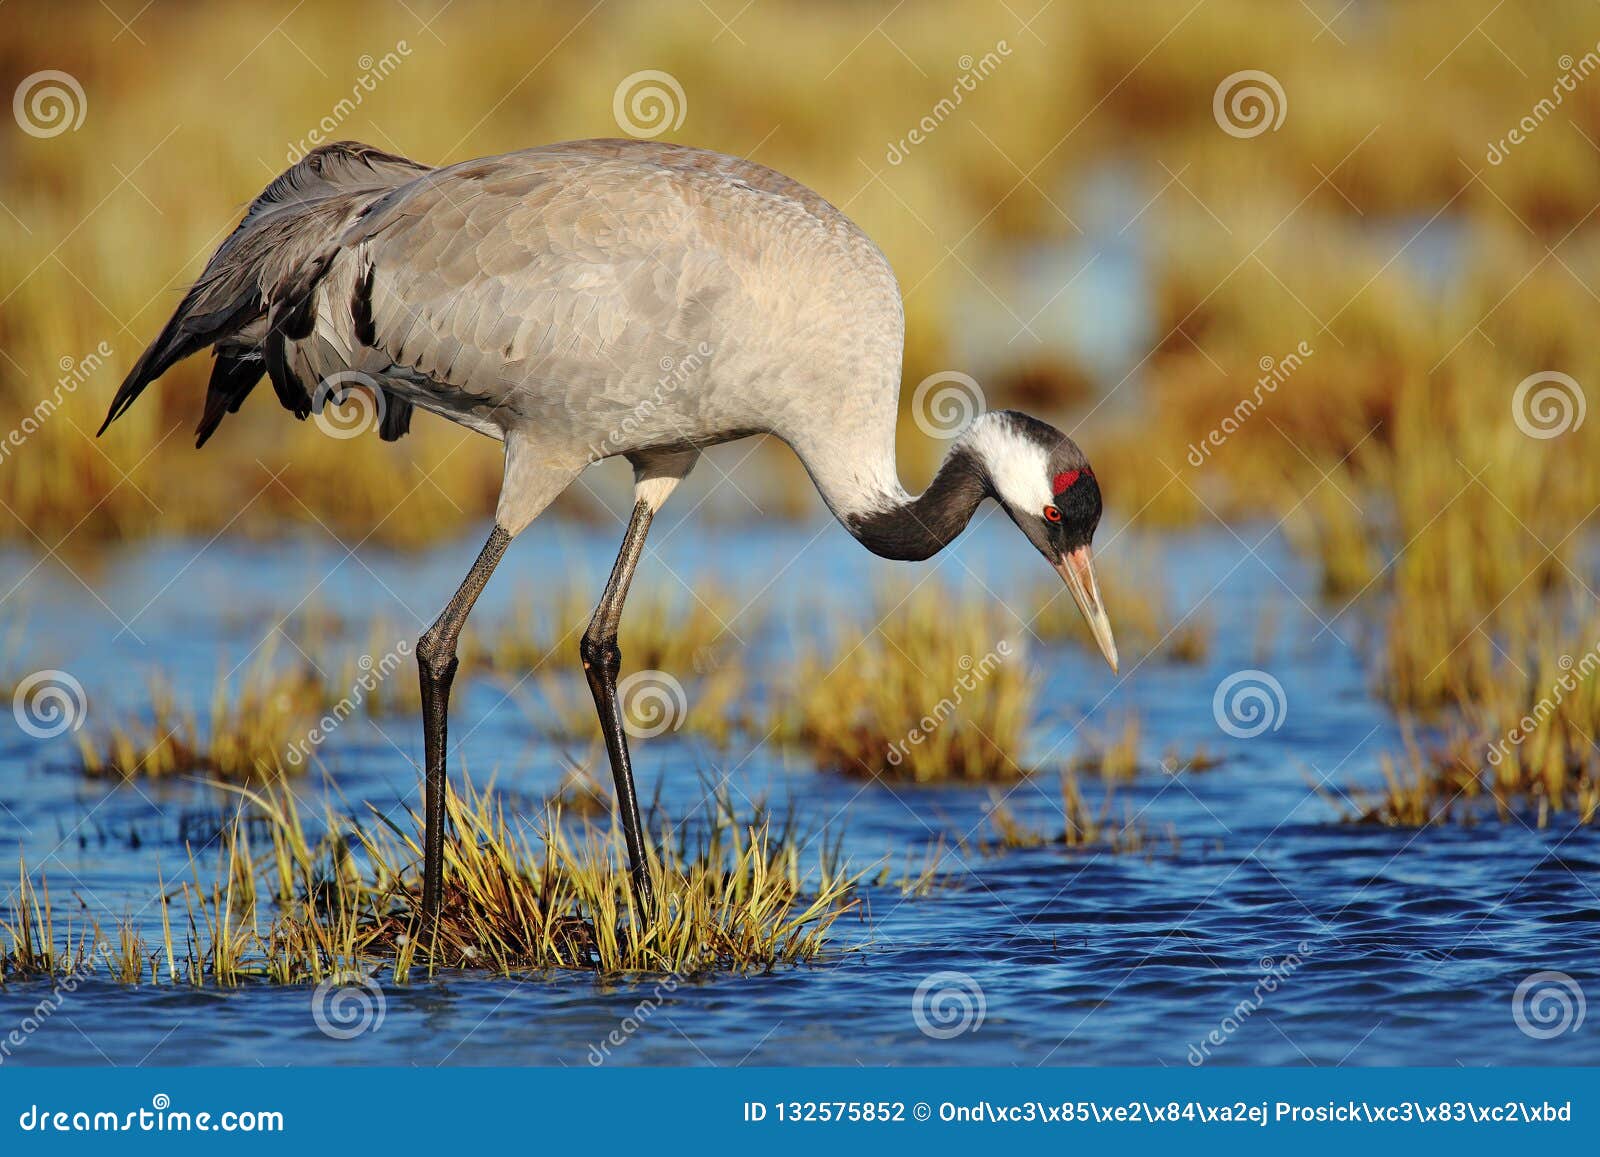 common crane, grus grus, big bird in the nature habitat, lake hornborga, sweden. wildlife scene from europe. grey crane with long